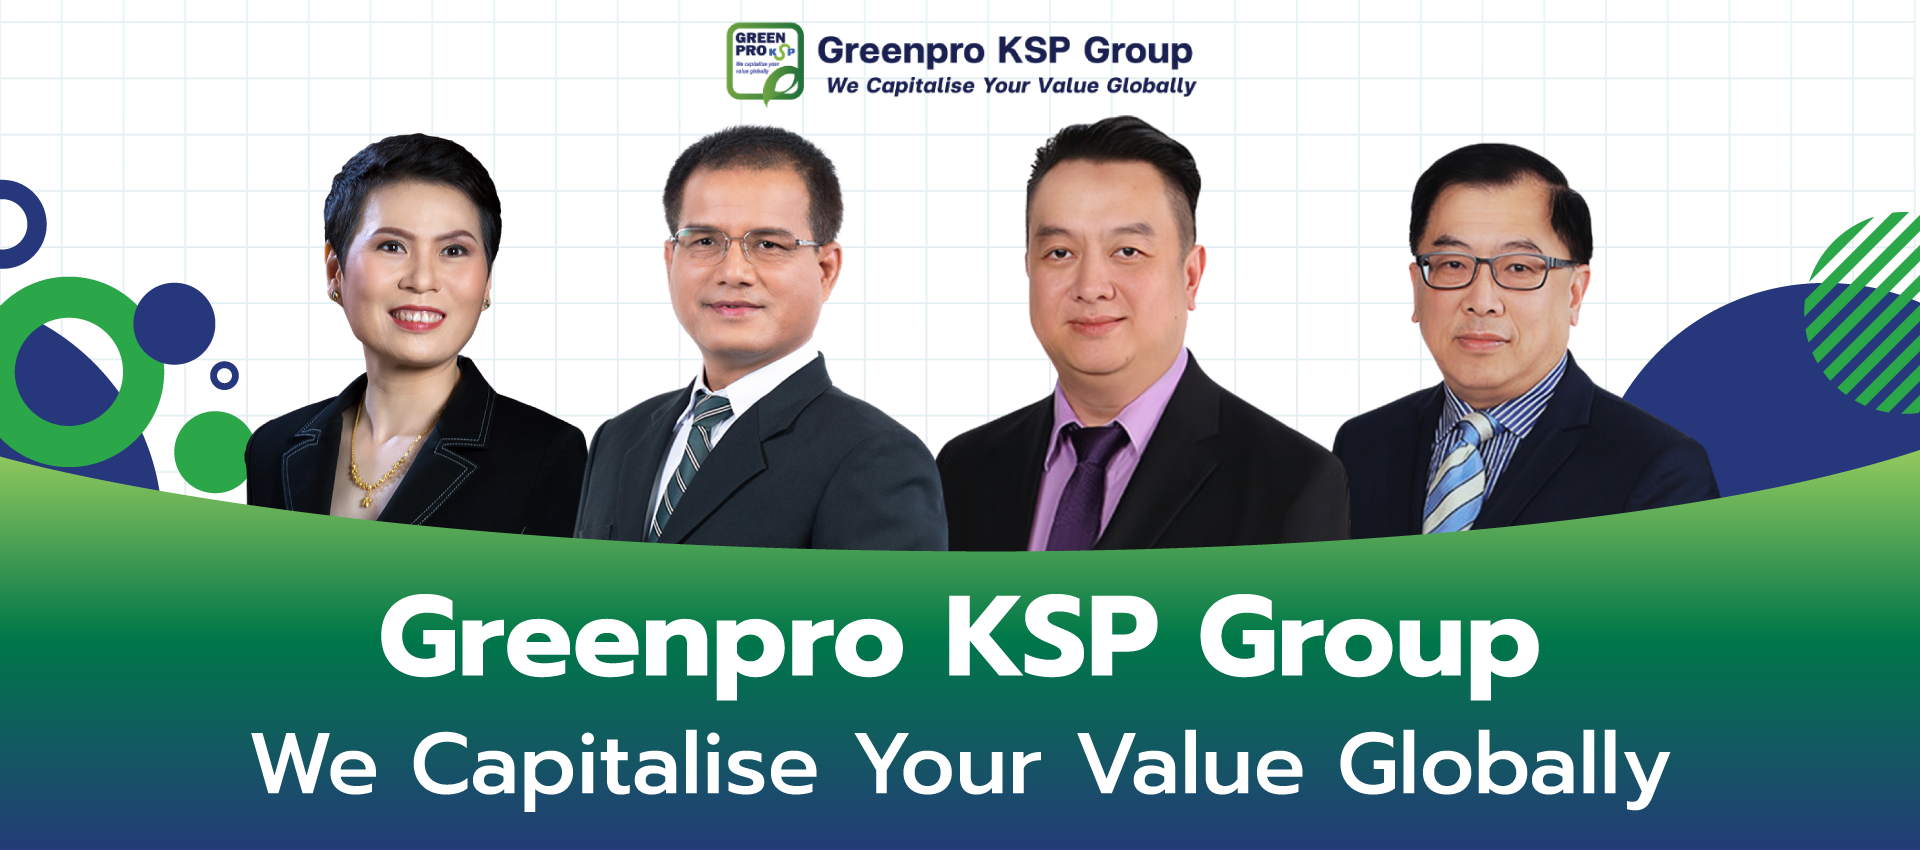 Greenpro KSP Group 1